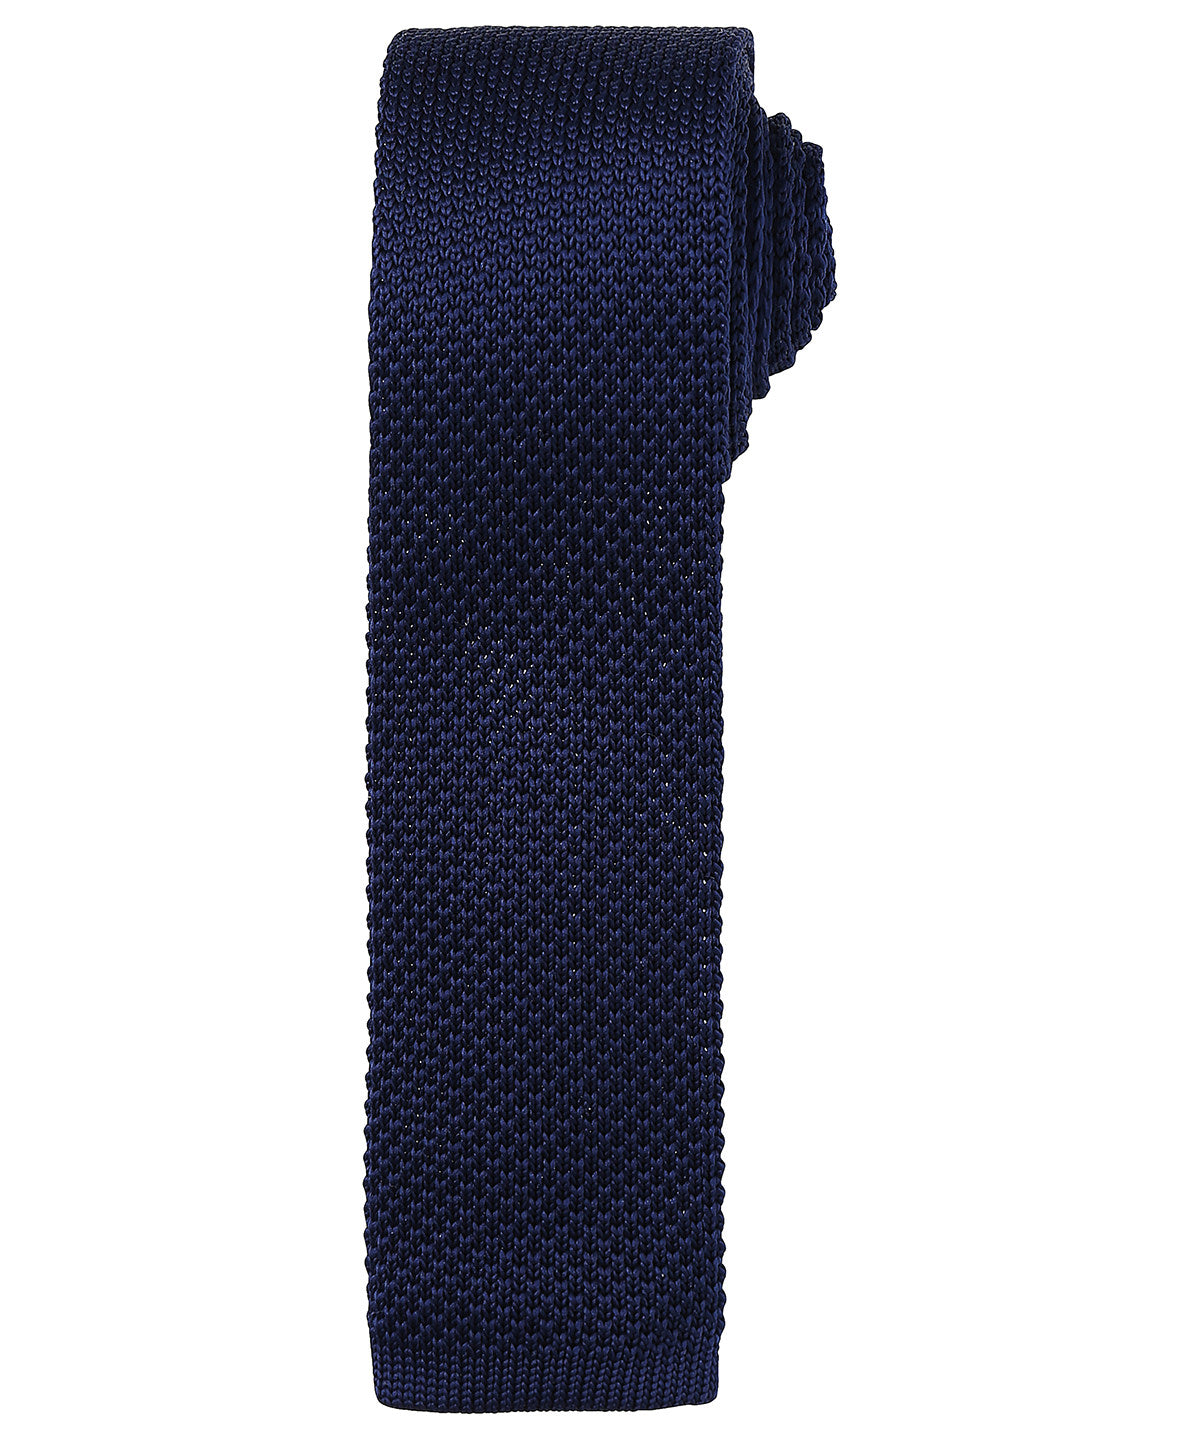 Bindi - Slim Knitted Tie